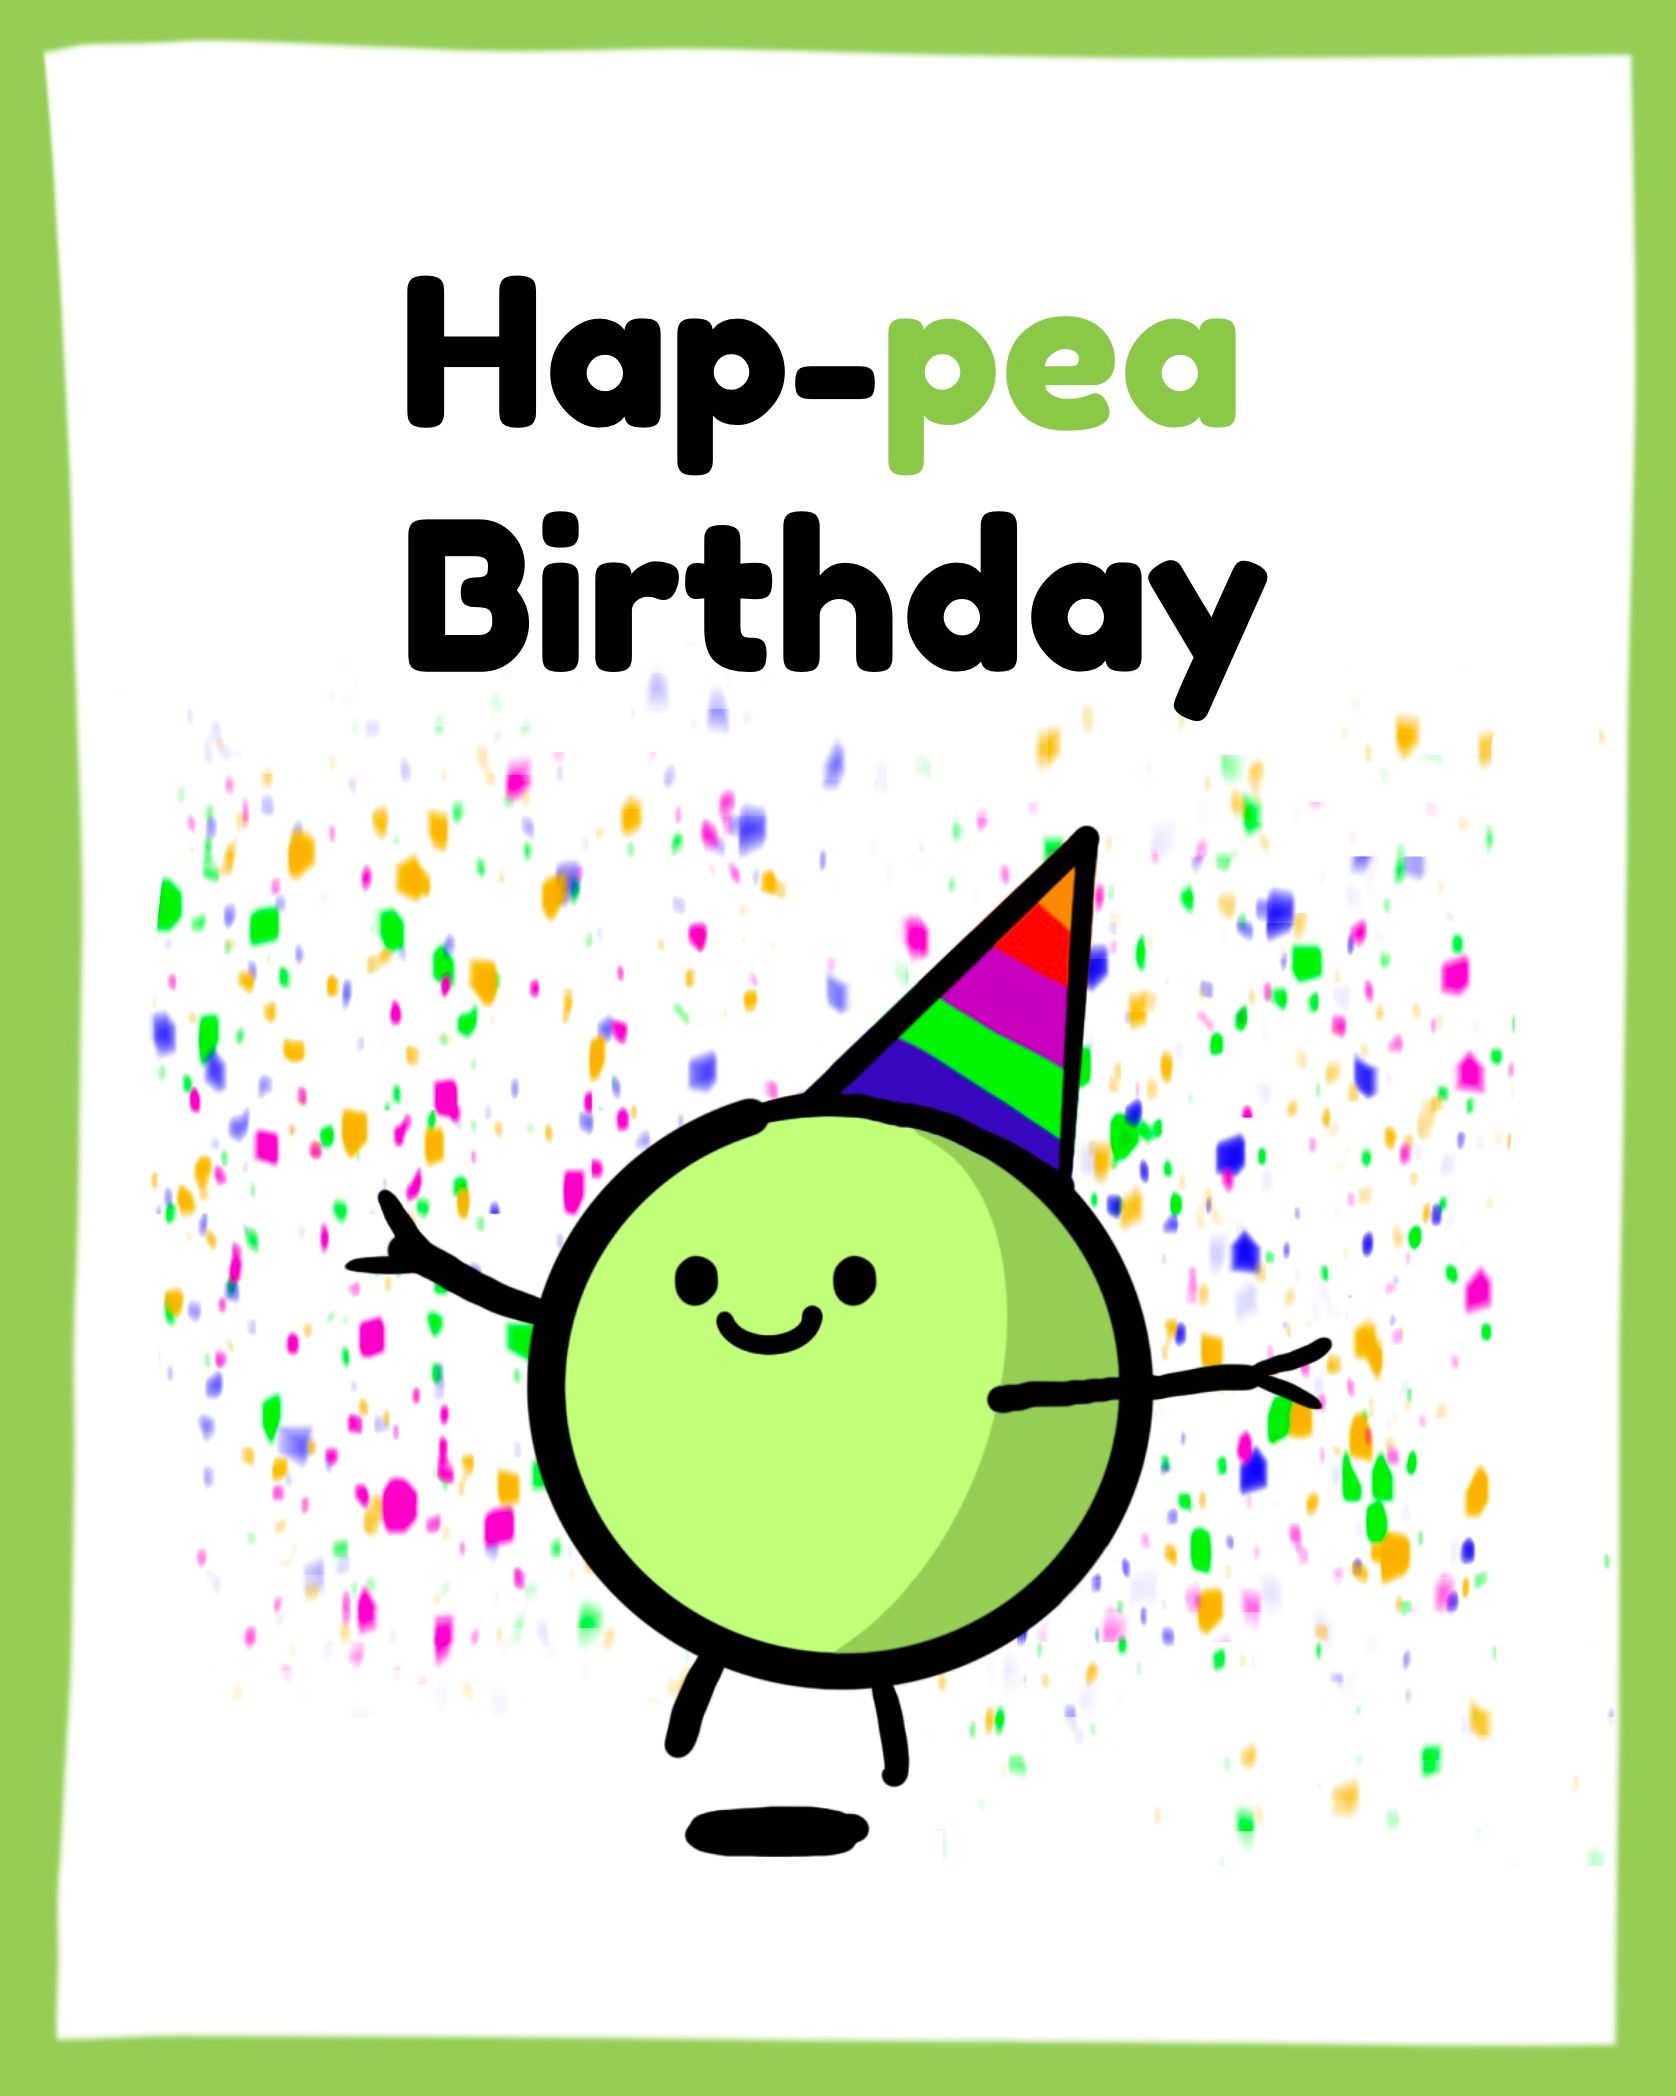 Card design "hap-pea birthday"